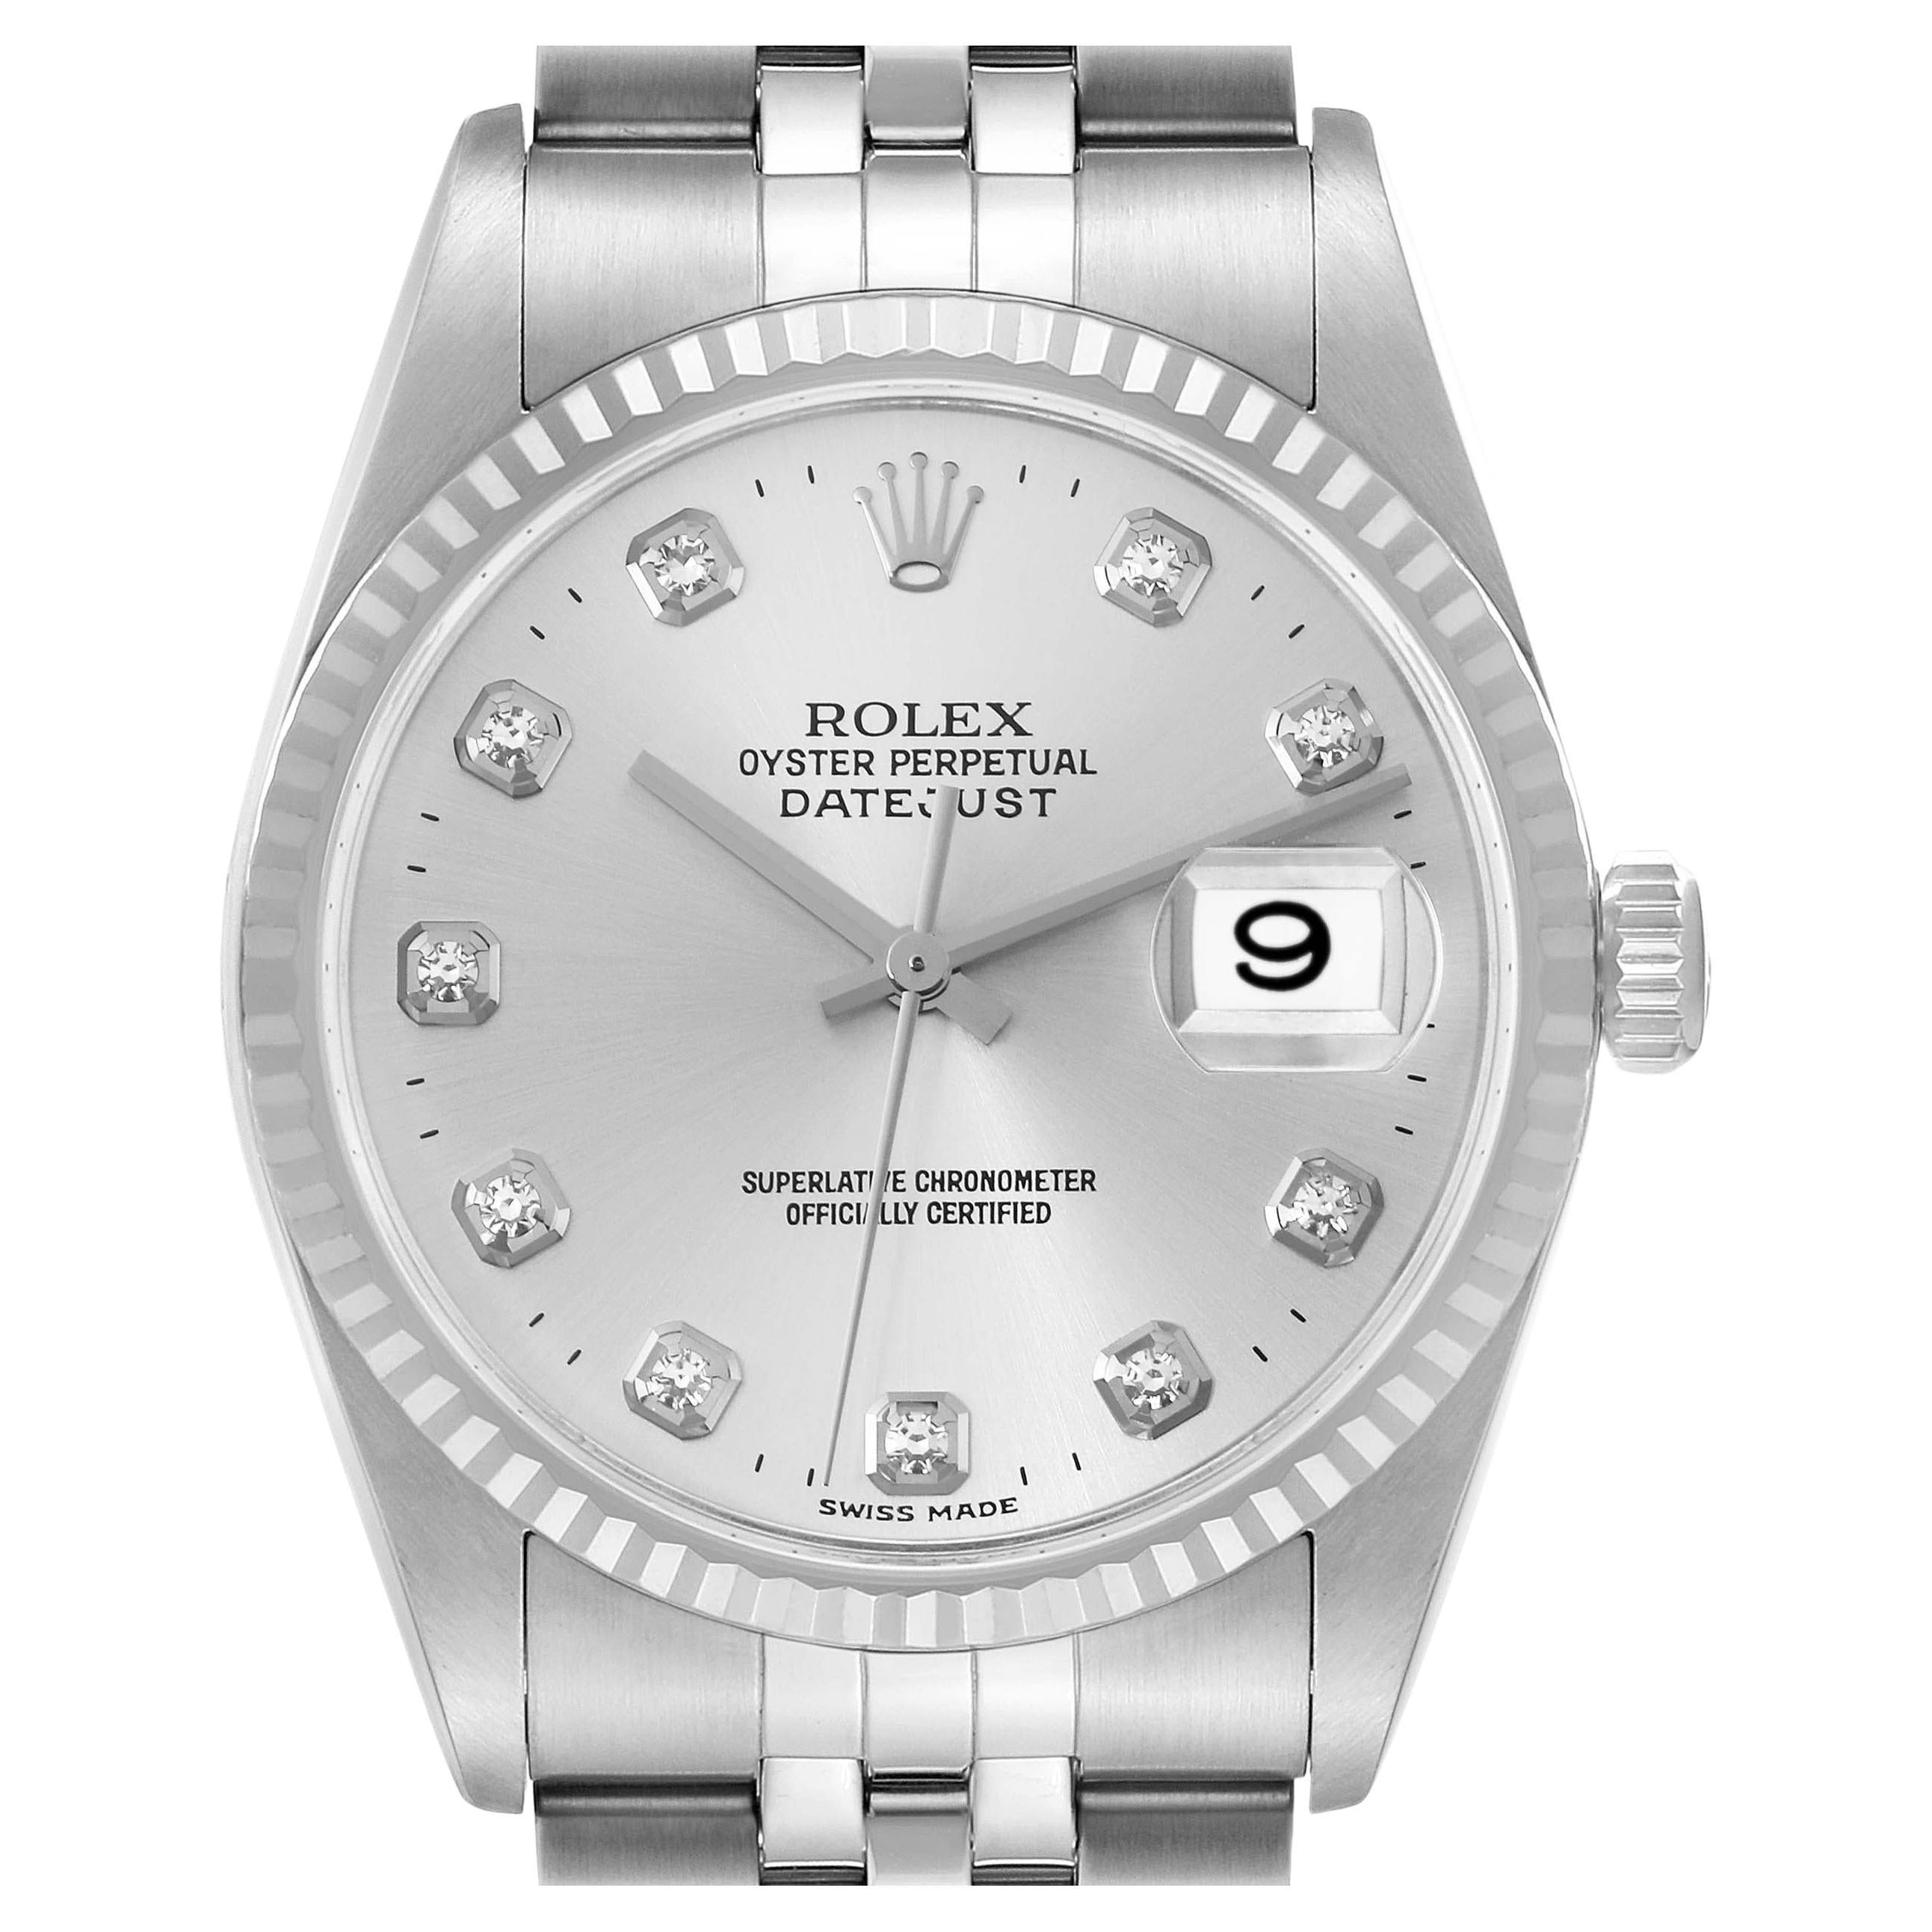 Rolex Datejust Steel White Gold Diamond Dial Mens Watch 16234